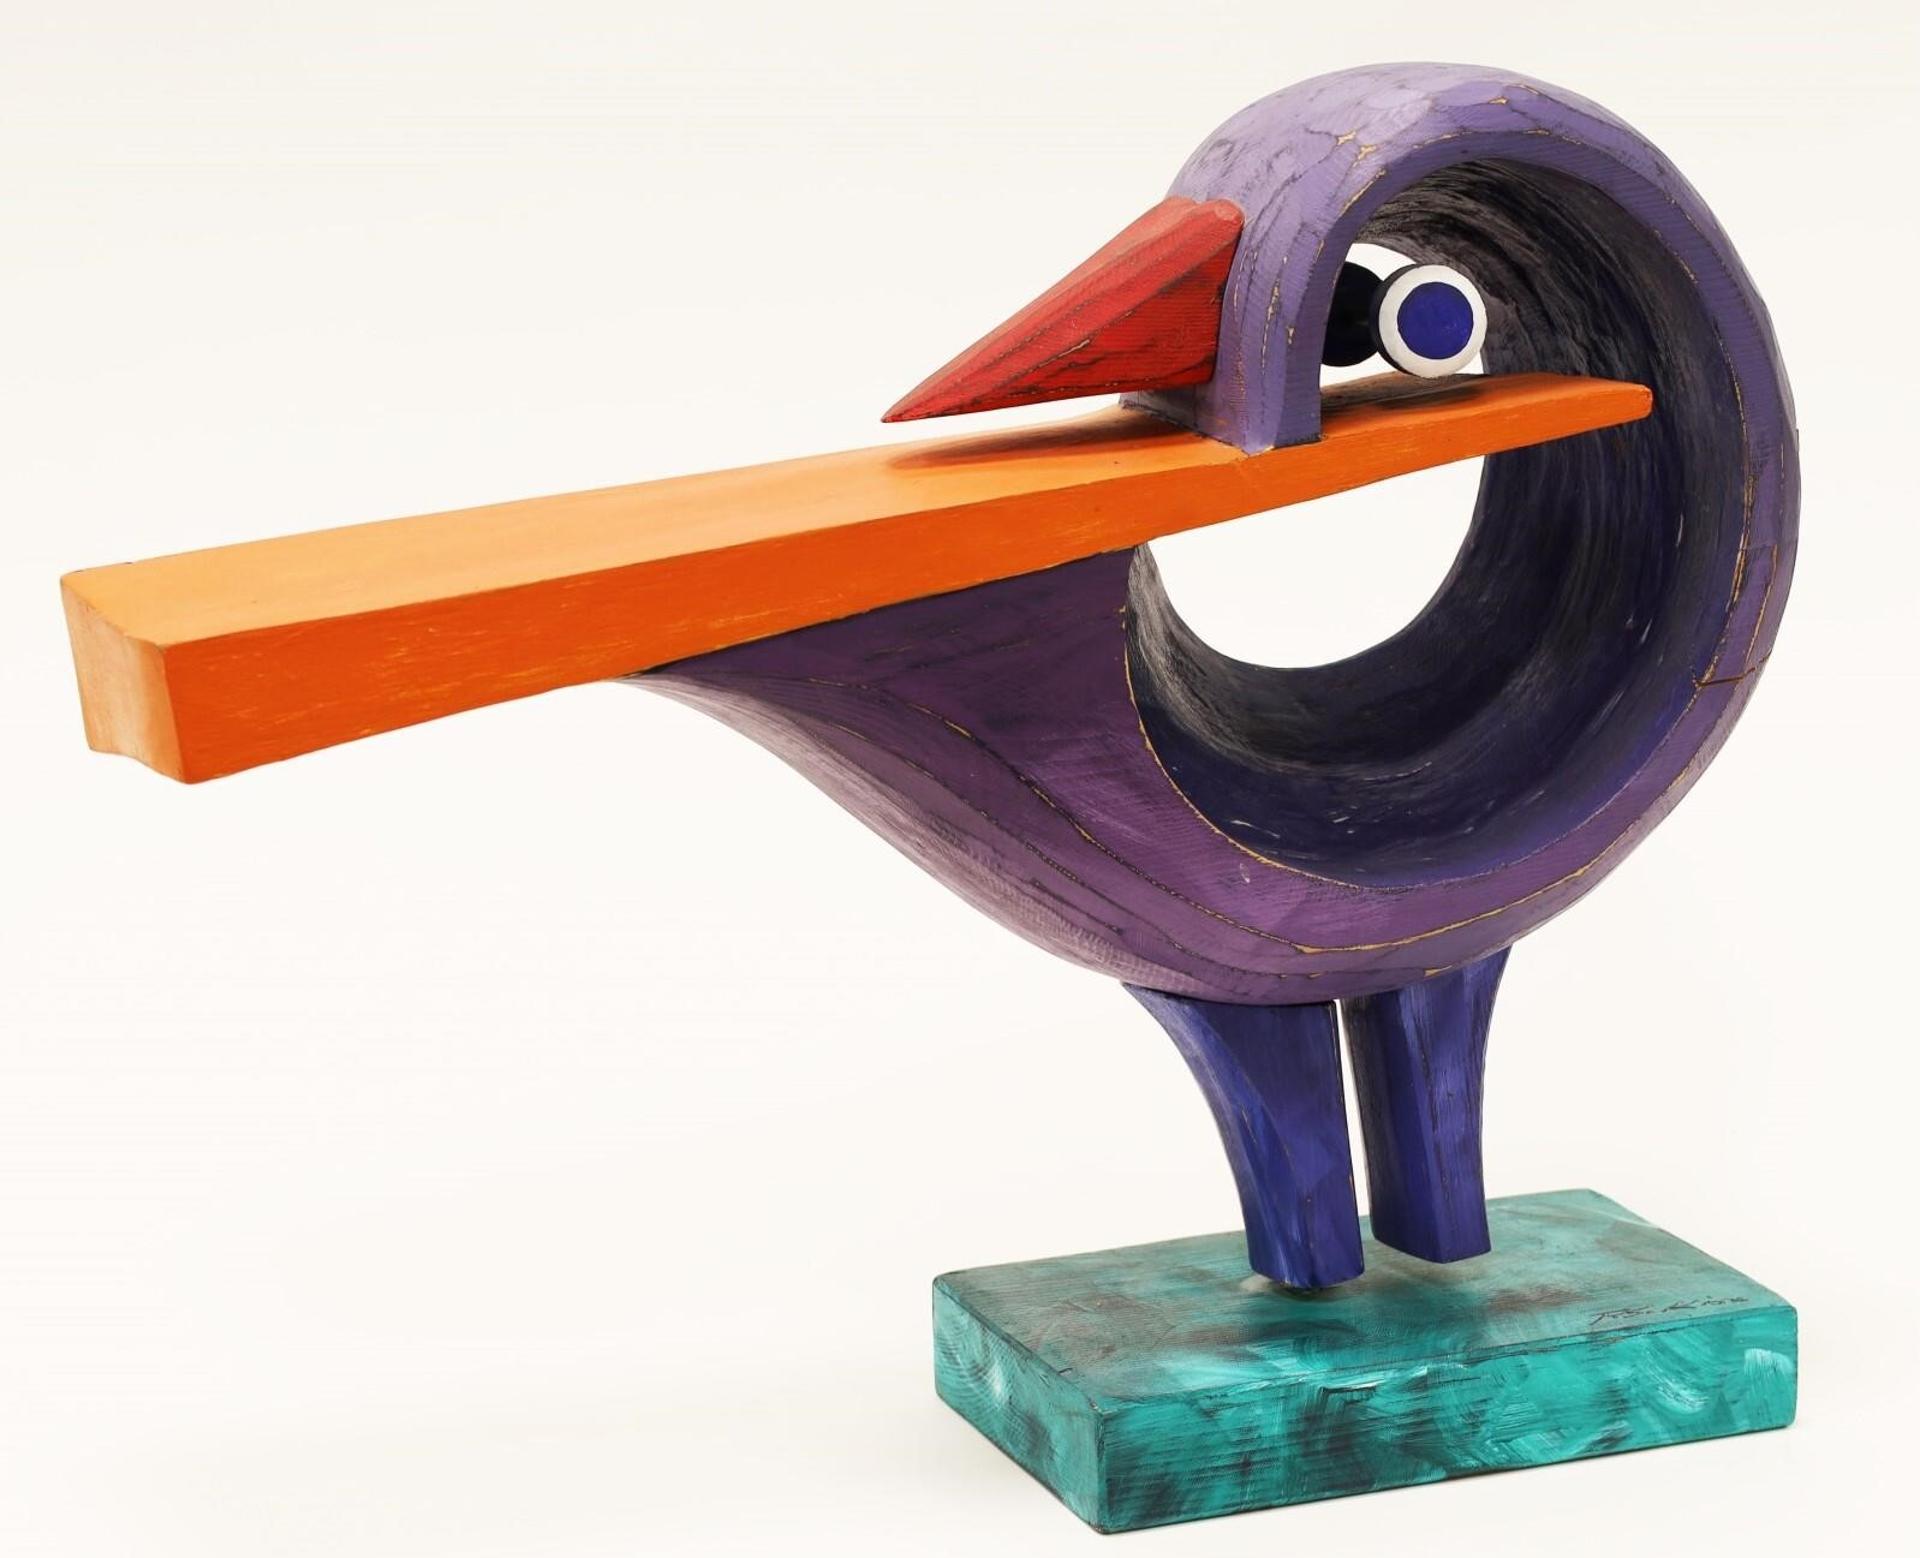 Peter S. Kiss (1954) - Bird with Red Beak